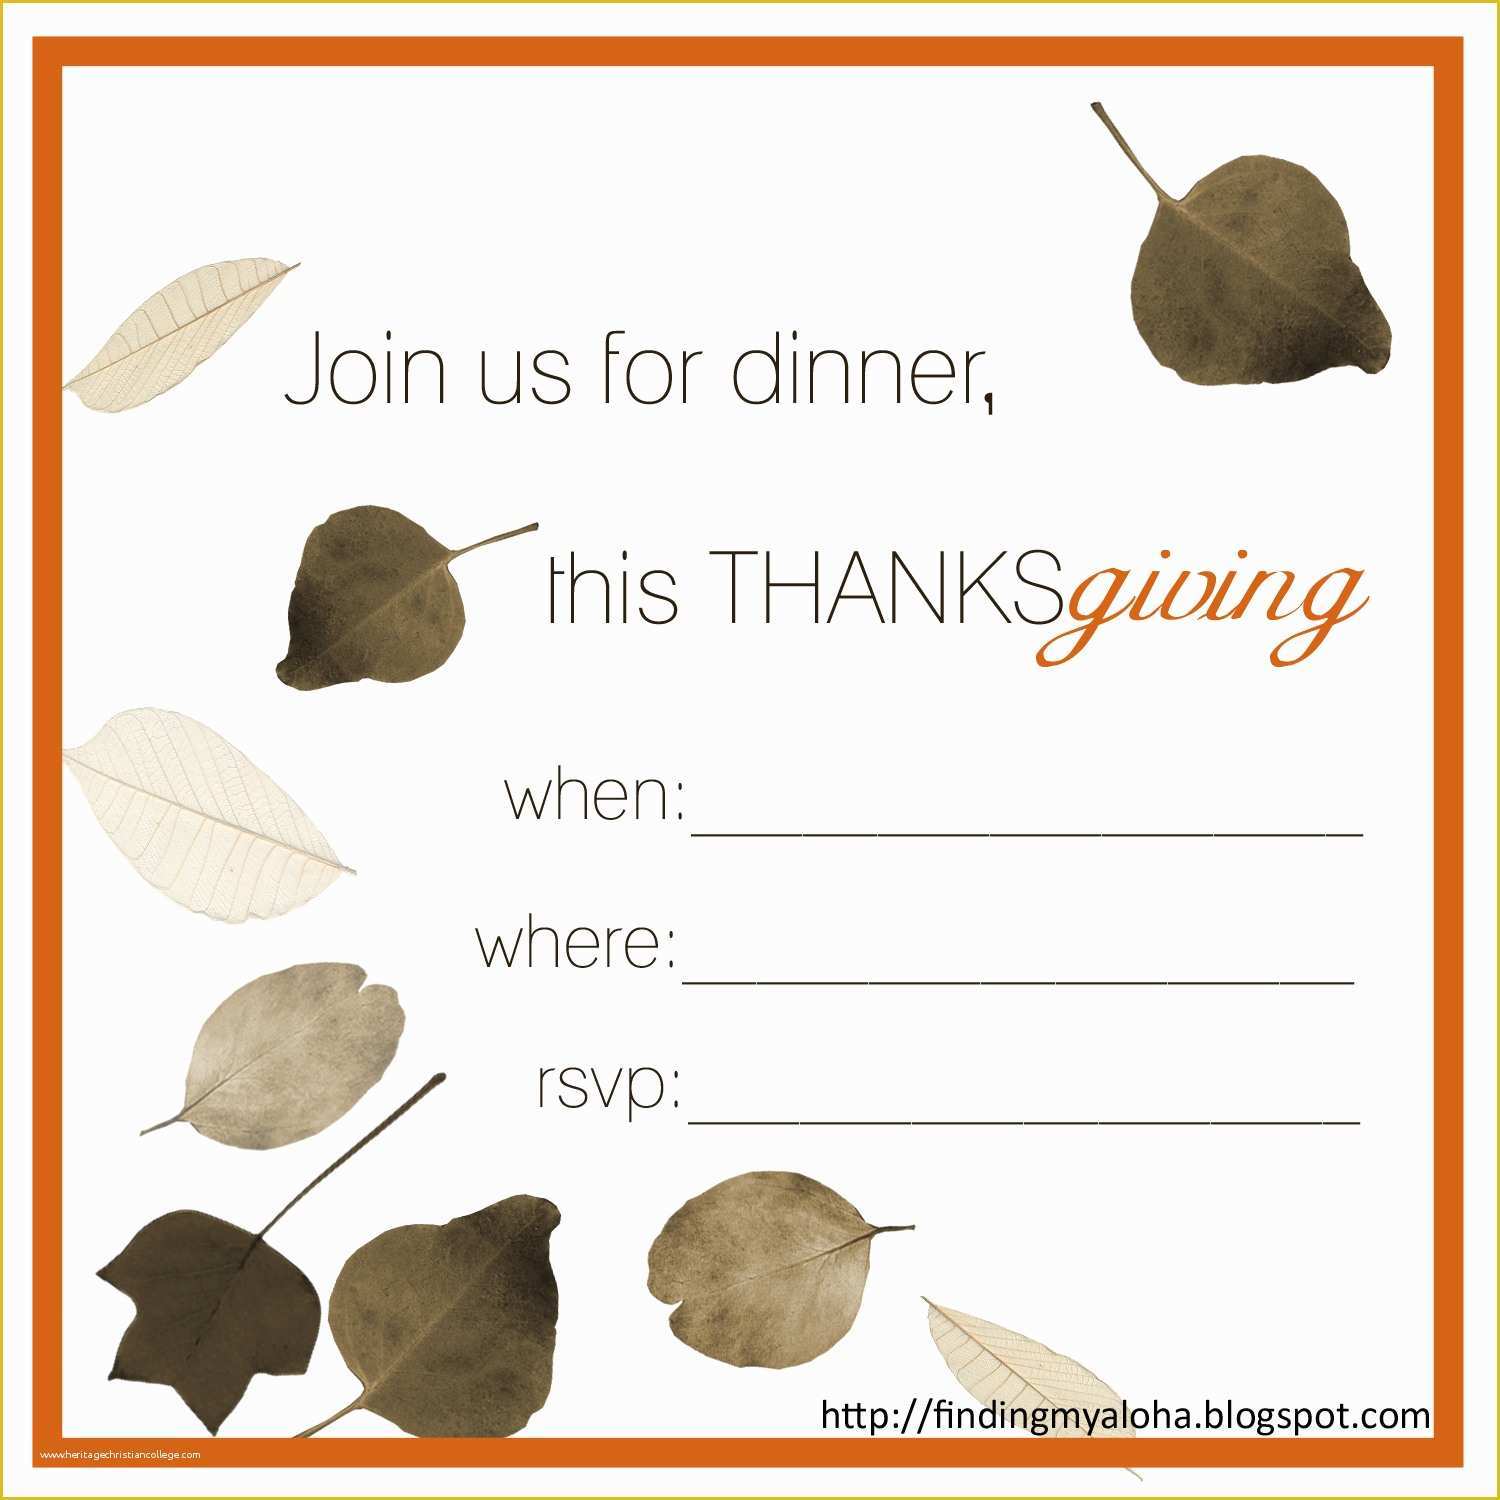 Free Thanksgiving Invitation Templates Of Thanksgiving Dinner Invitation Templates for Free – Happy